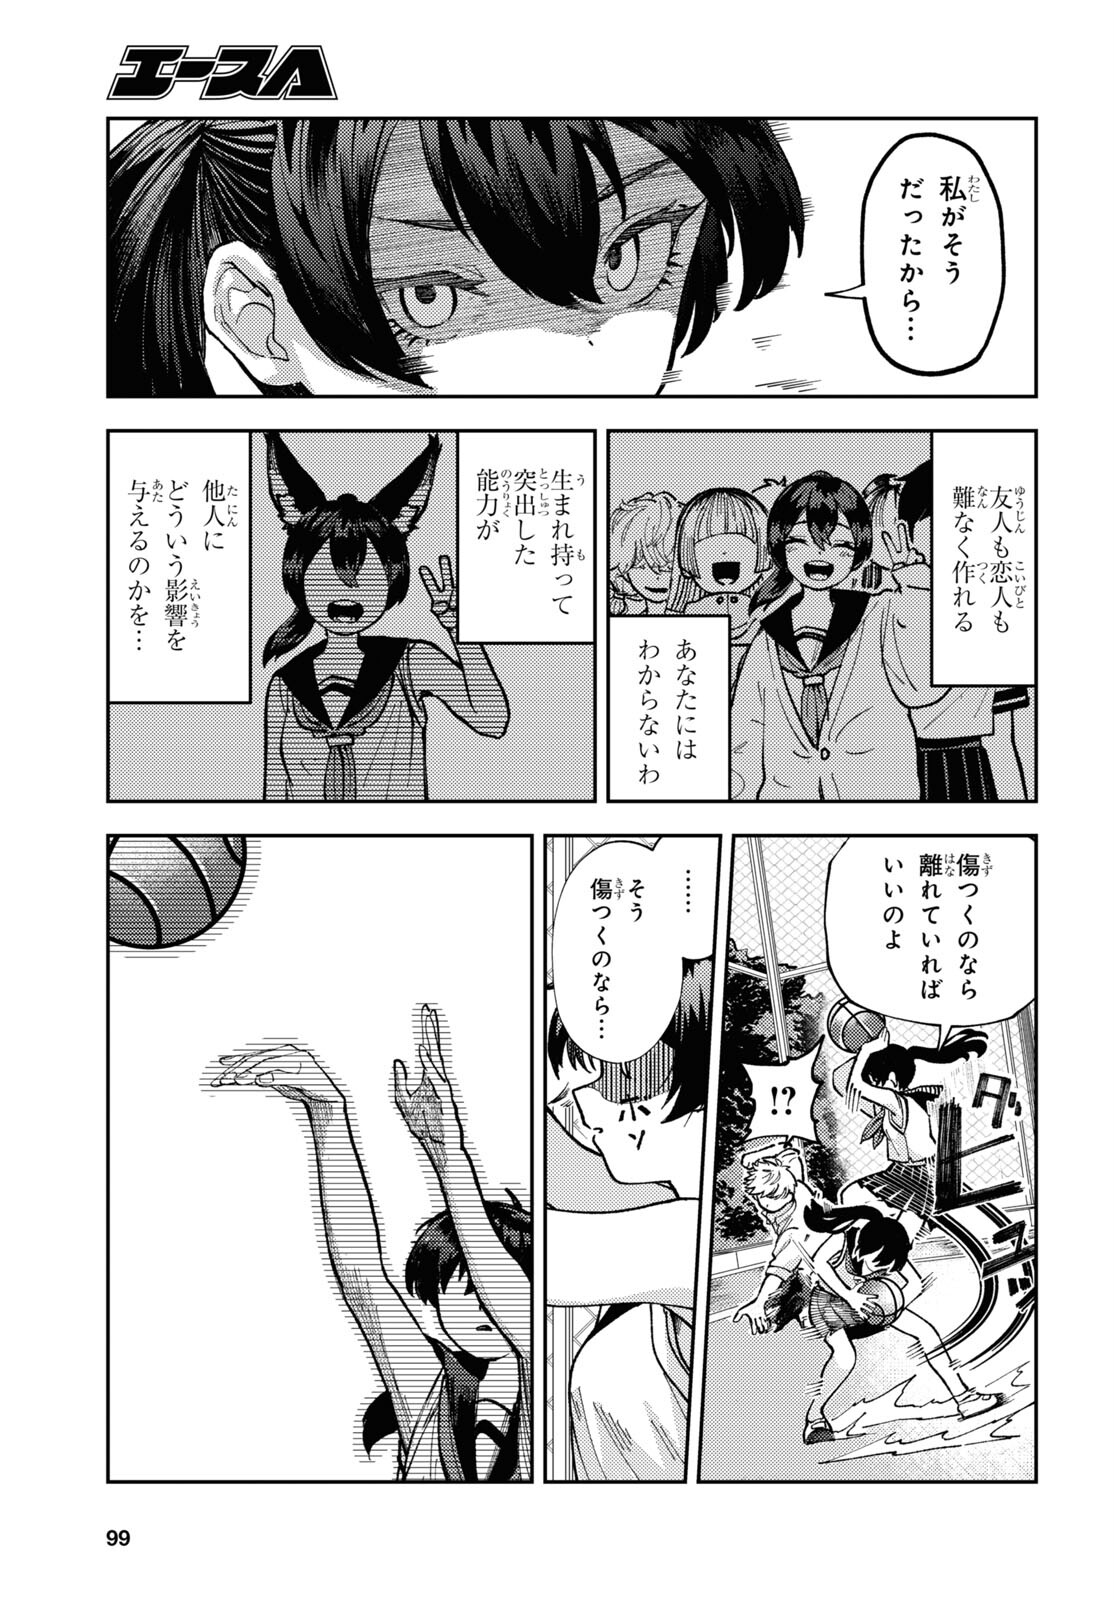 Garuru Girl - Chapter 3 - Page 13